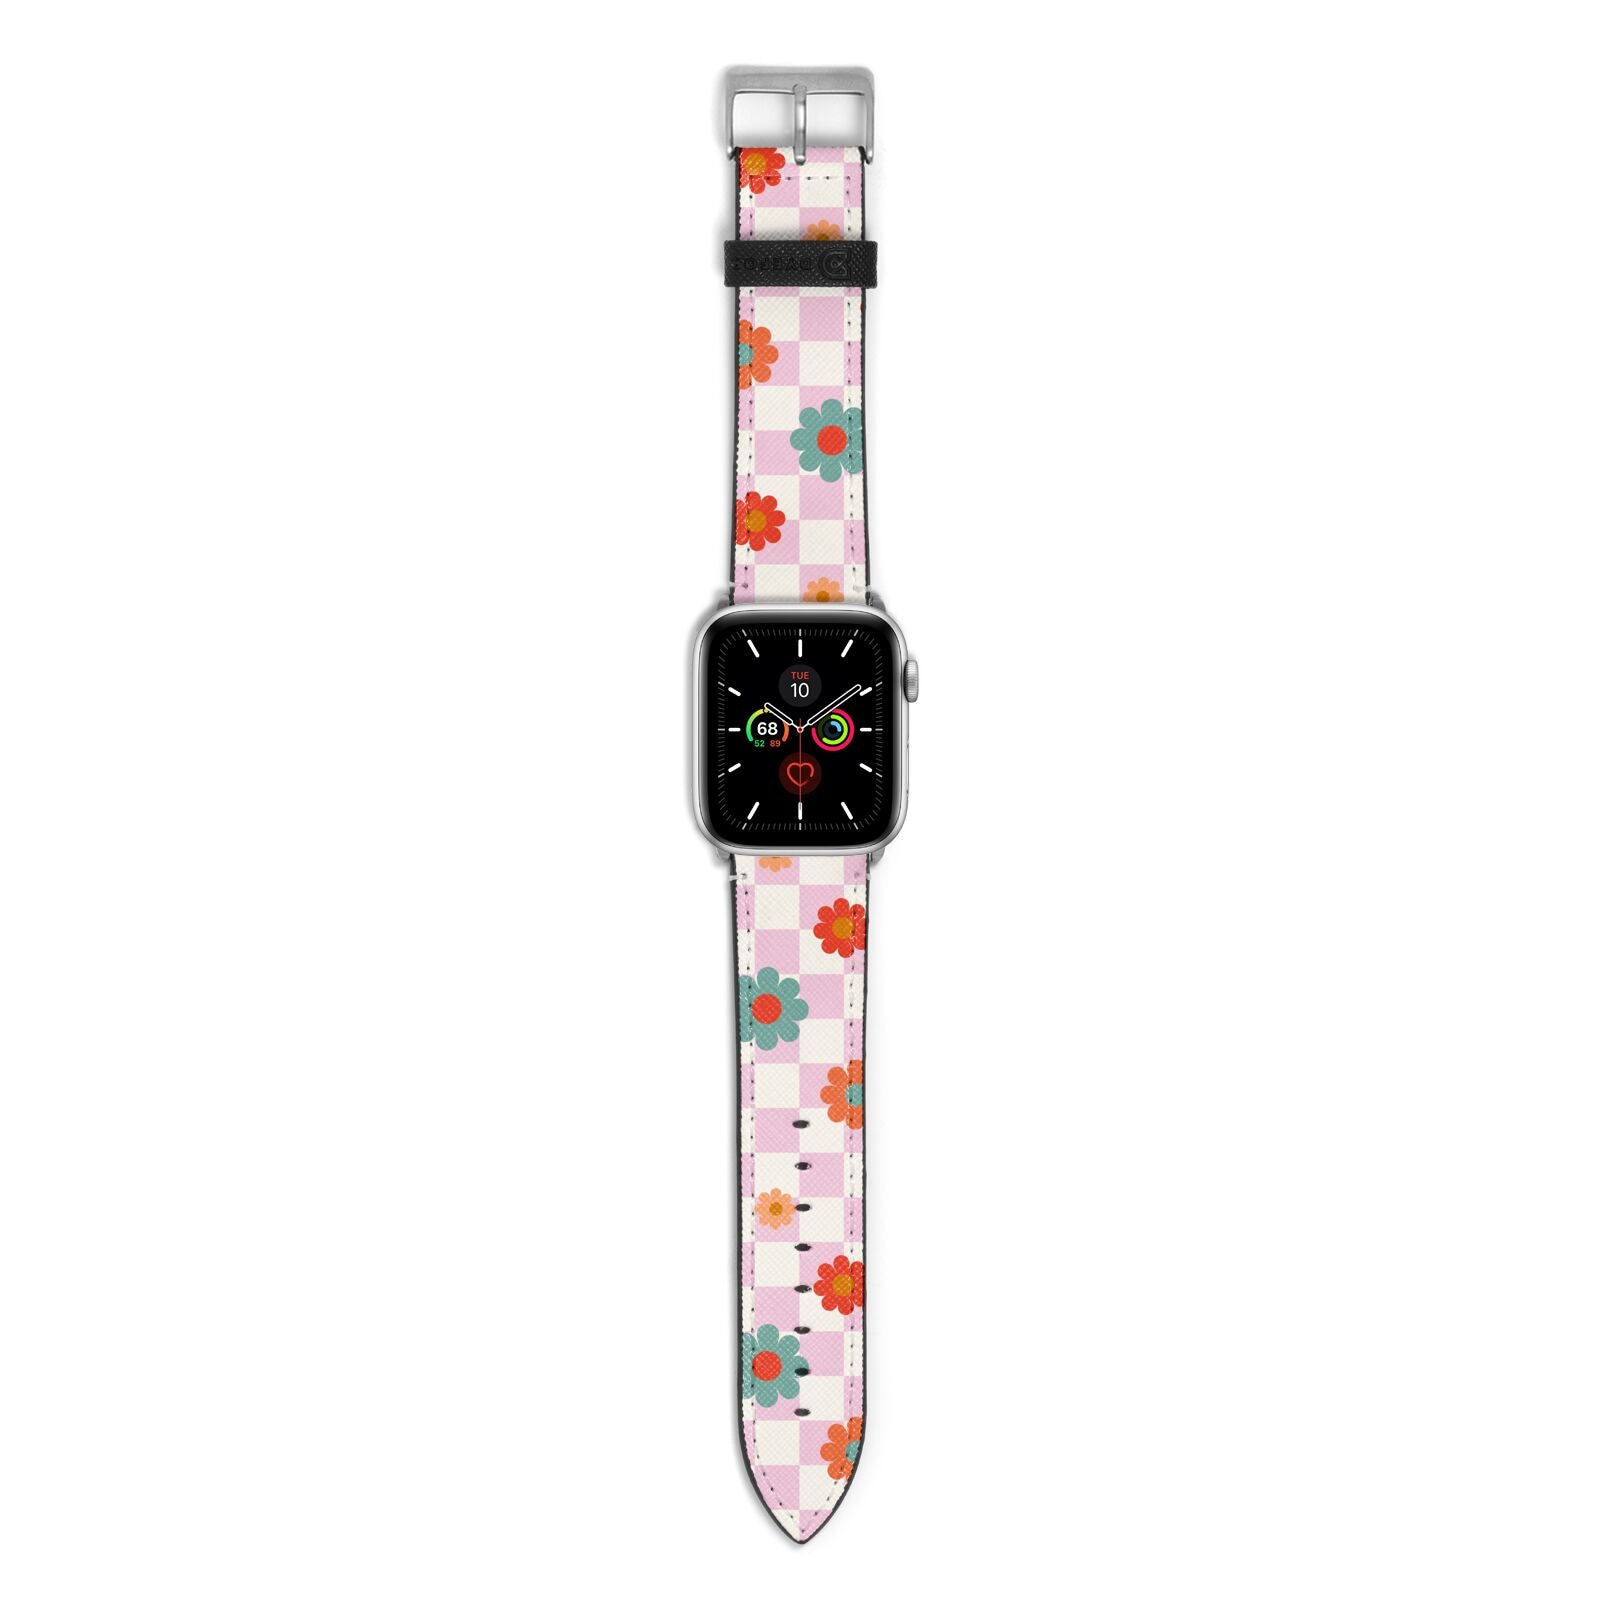 Flower Power Apple Watch Strap with Silver Hardware